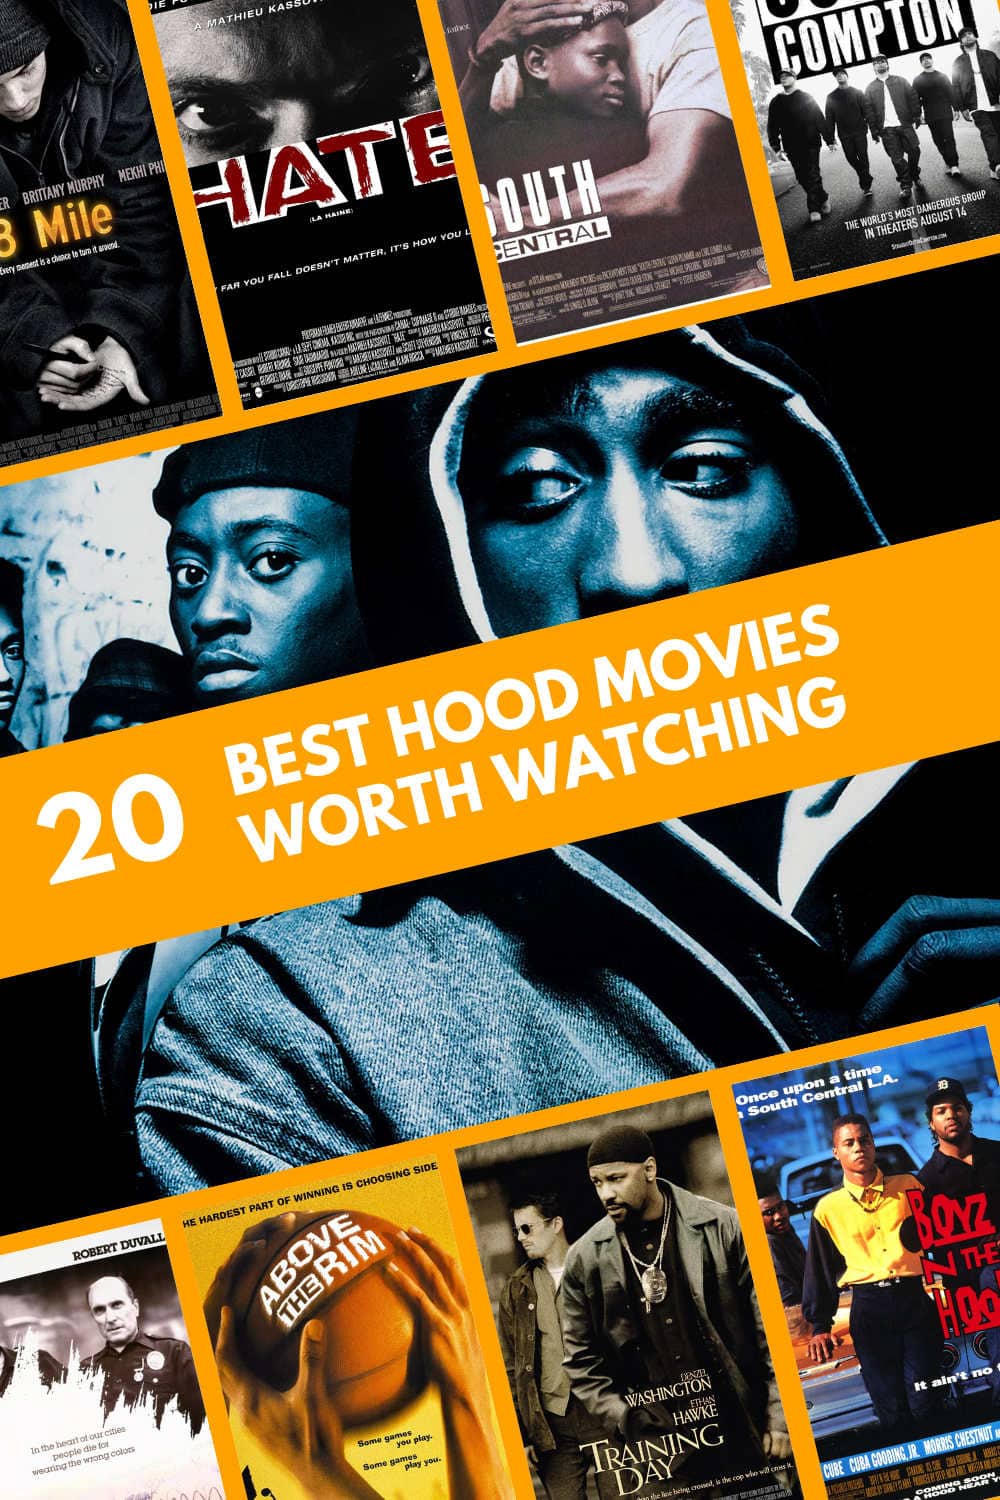 Hood Movies Worth Watching